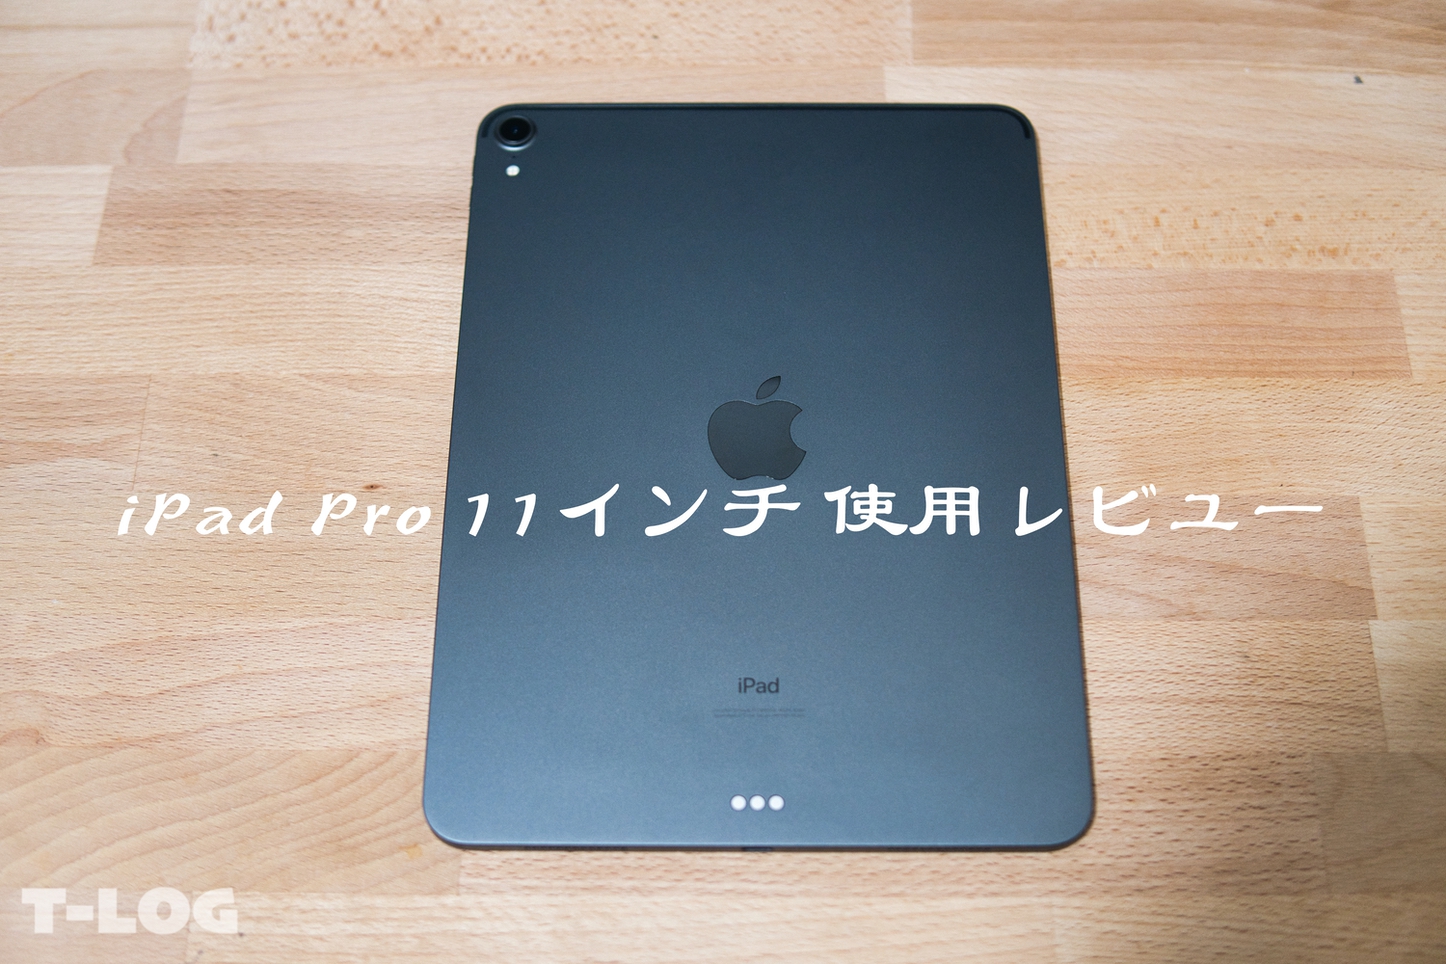 iPad Pro 11インチ 2018年版と付属品